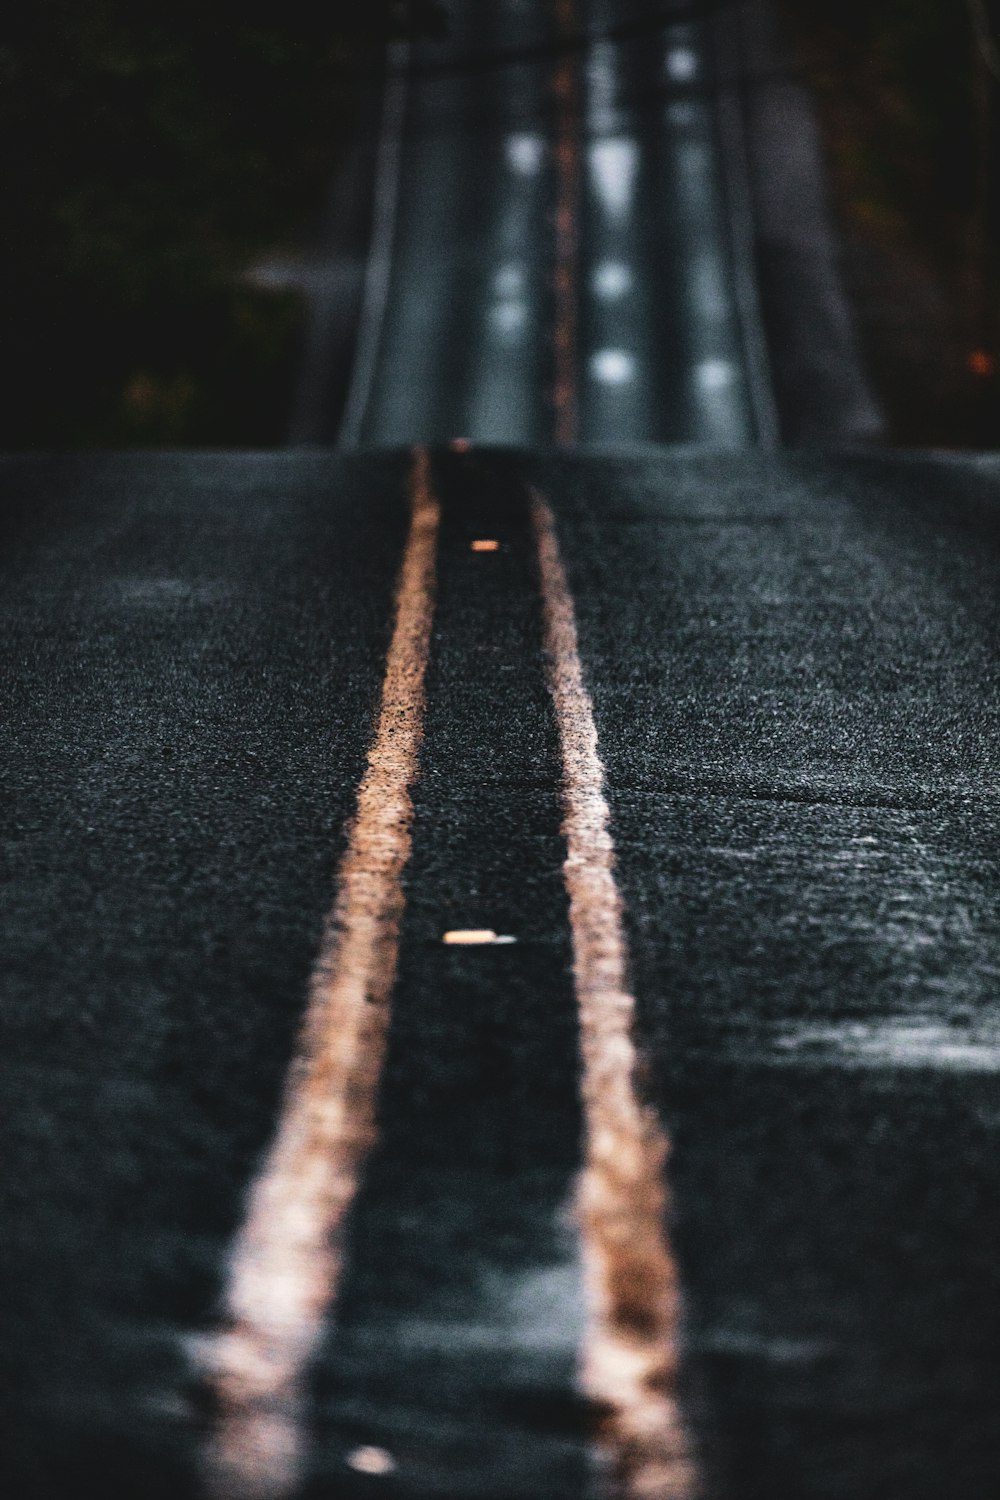 Carretera asfaltada